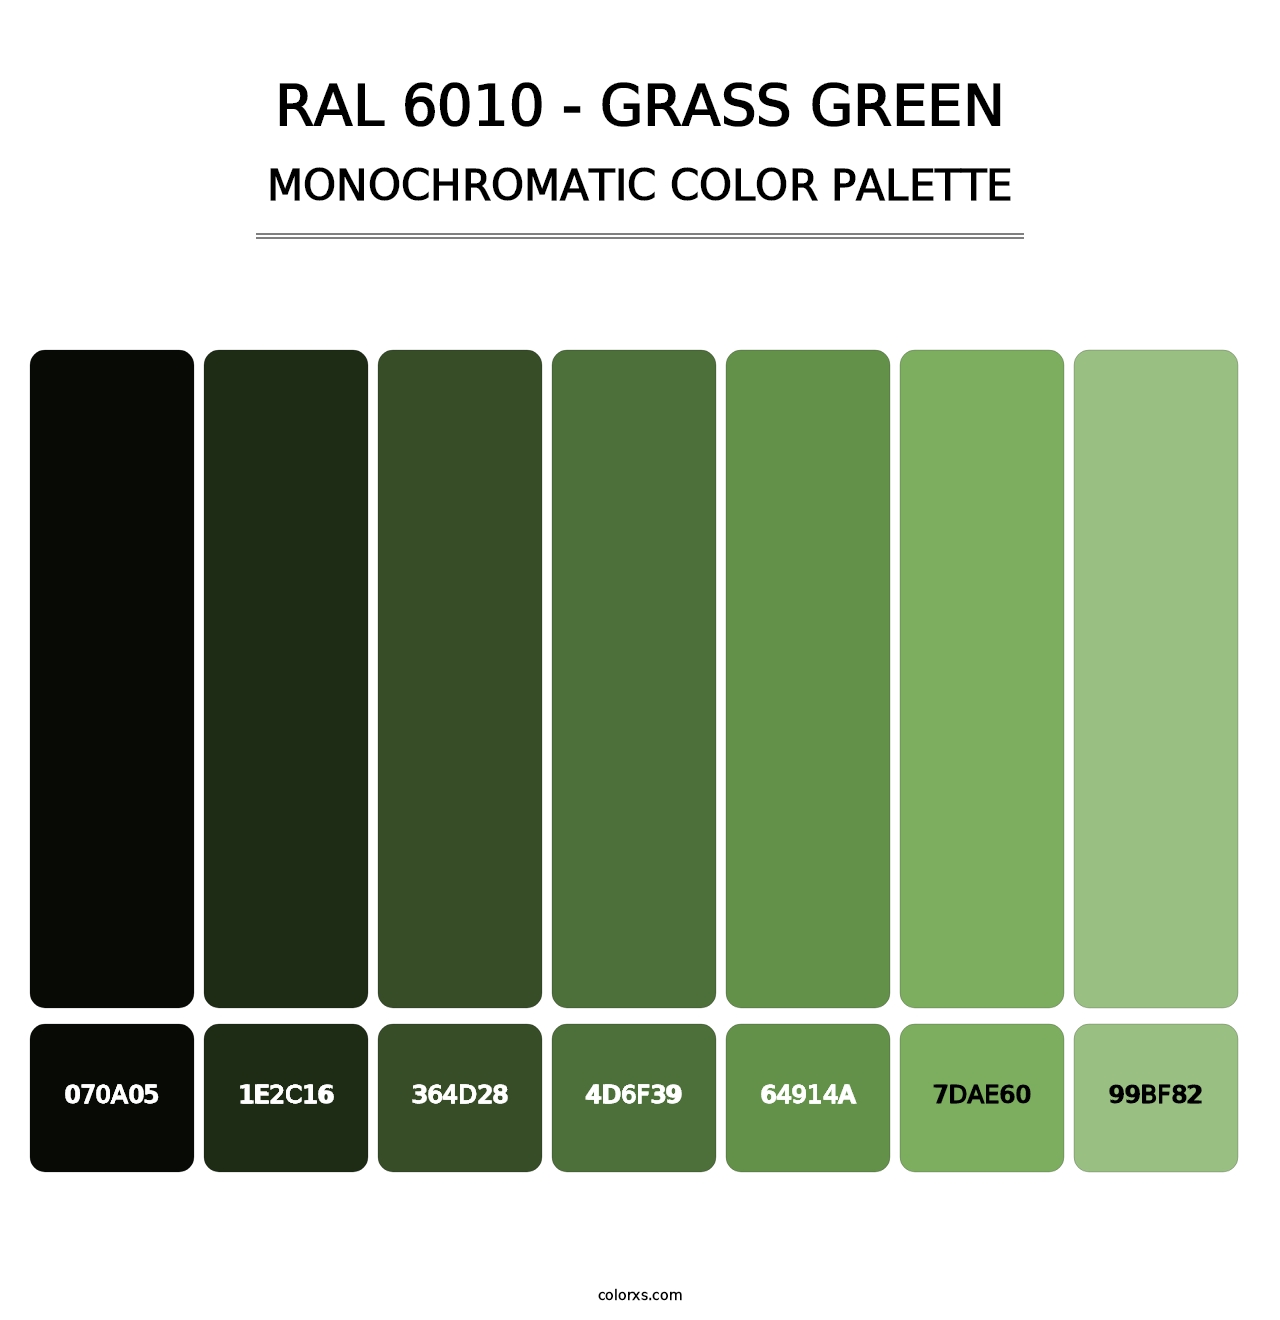 RAL 6010 - Grass Green - Monochromatic Color Palette